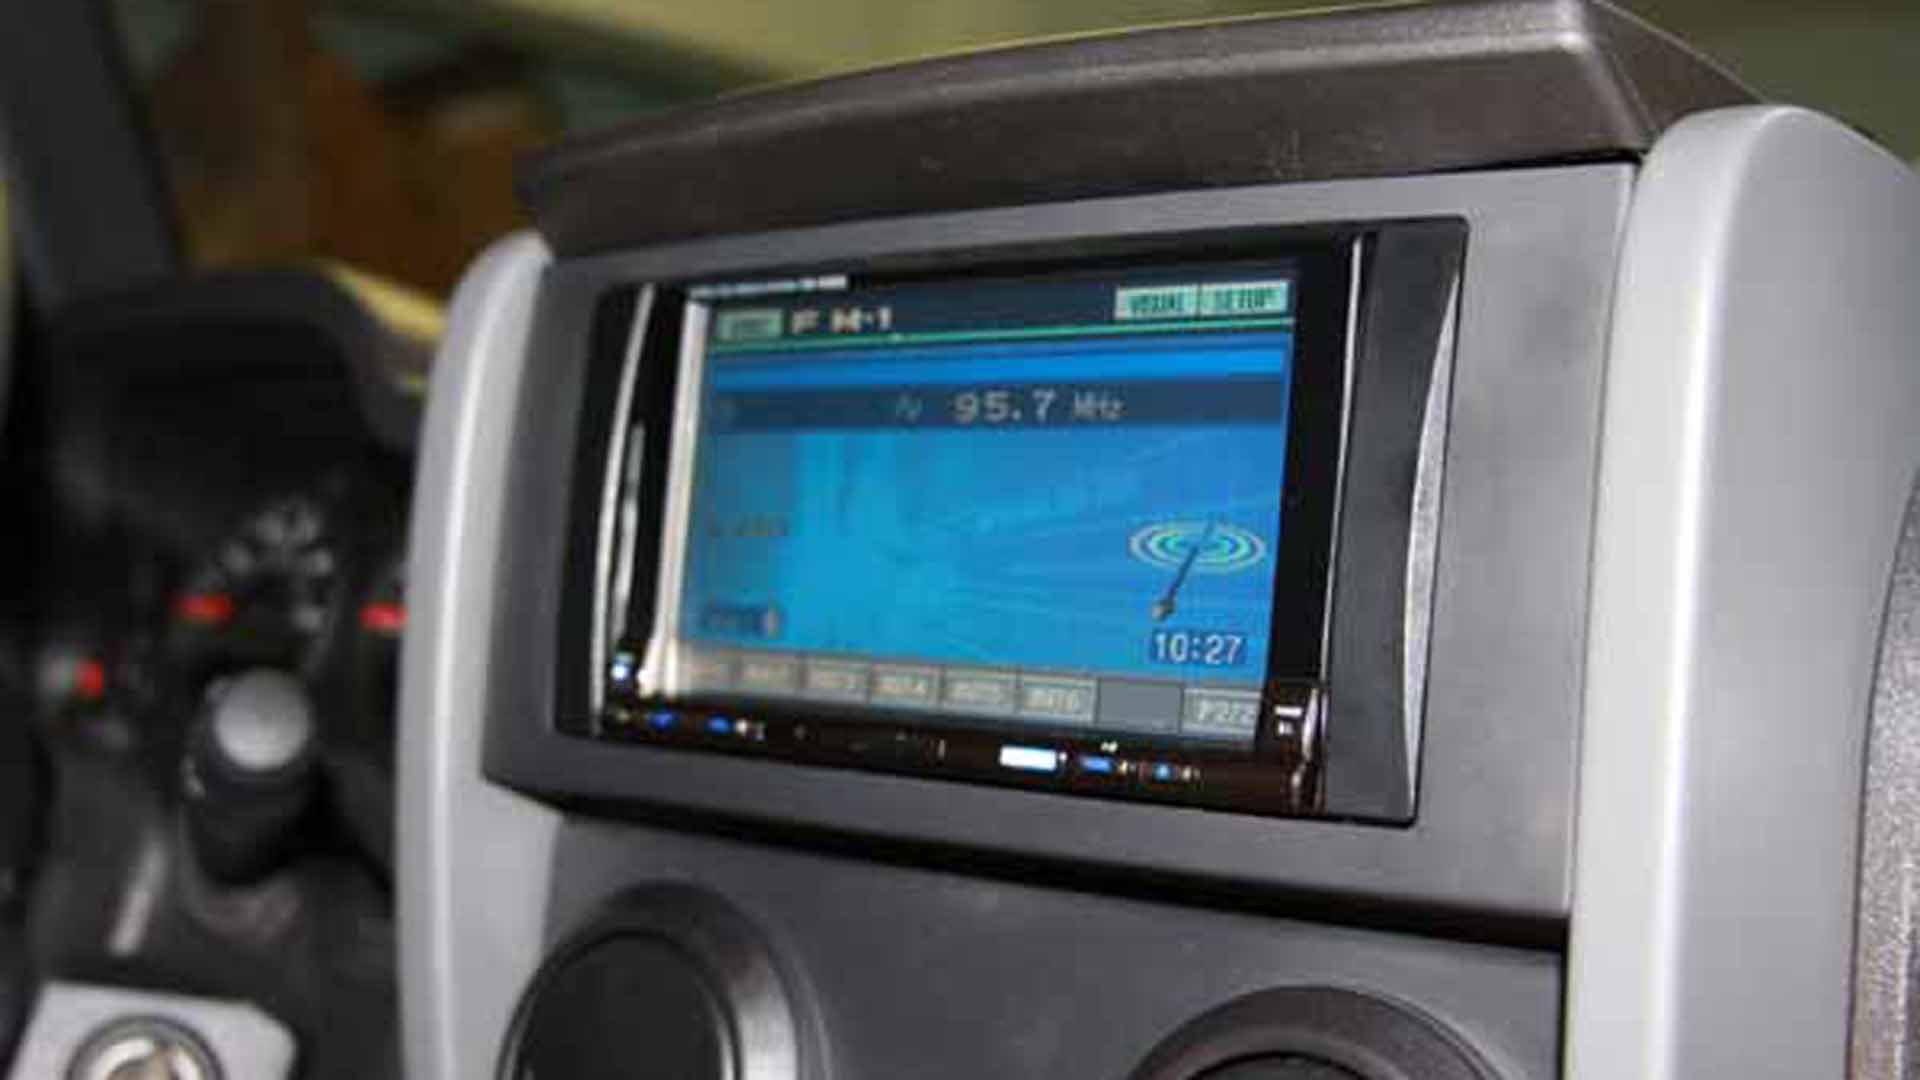 Jeep Wrangler JK: Car Stereo Sound Diagnostic | Jk-forum